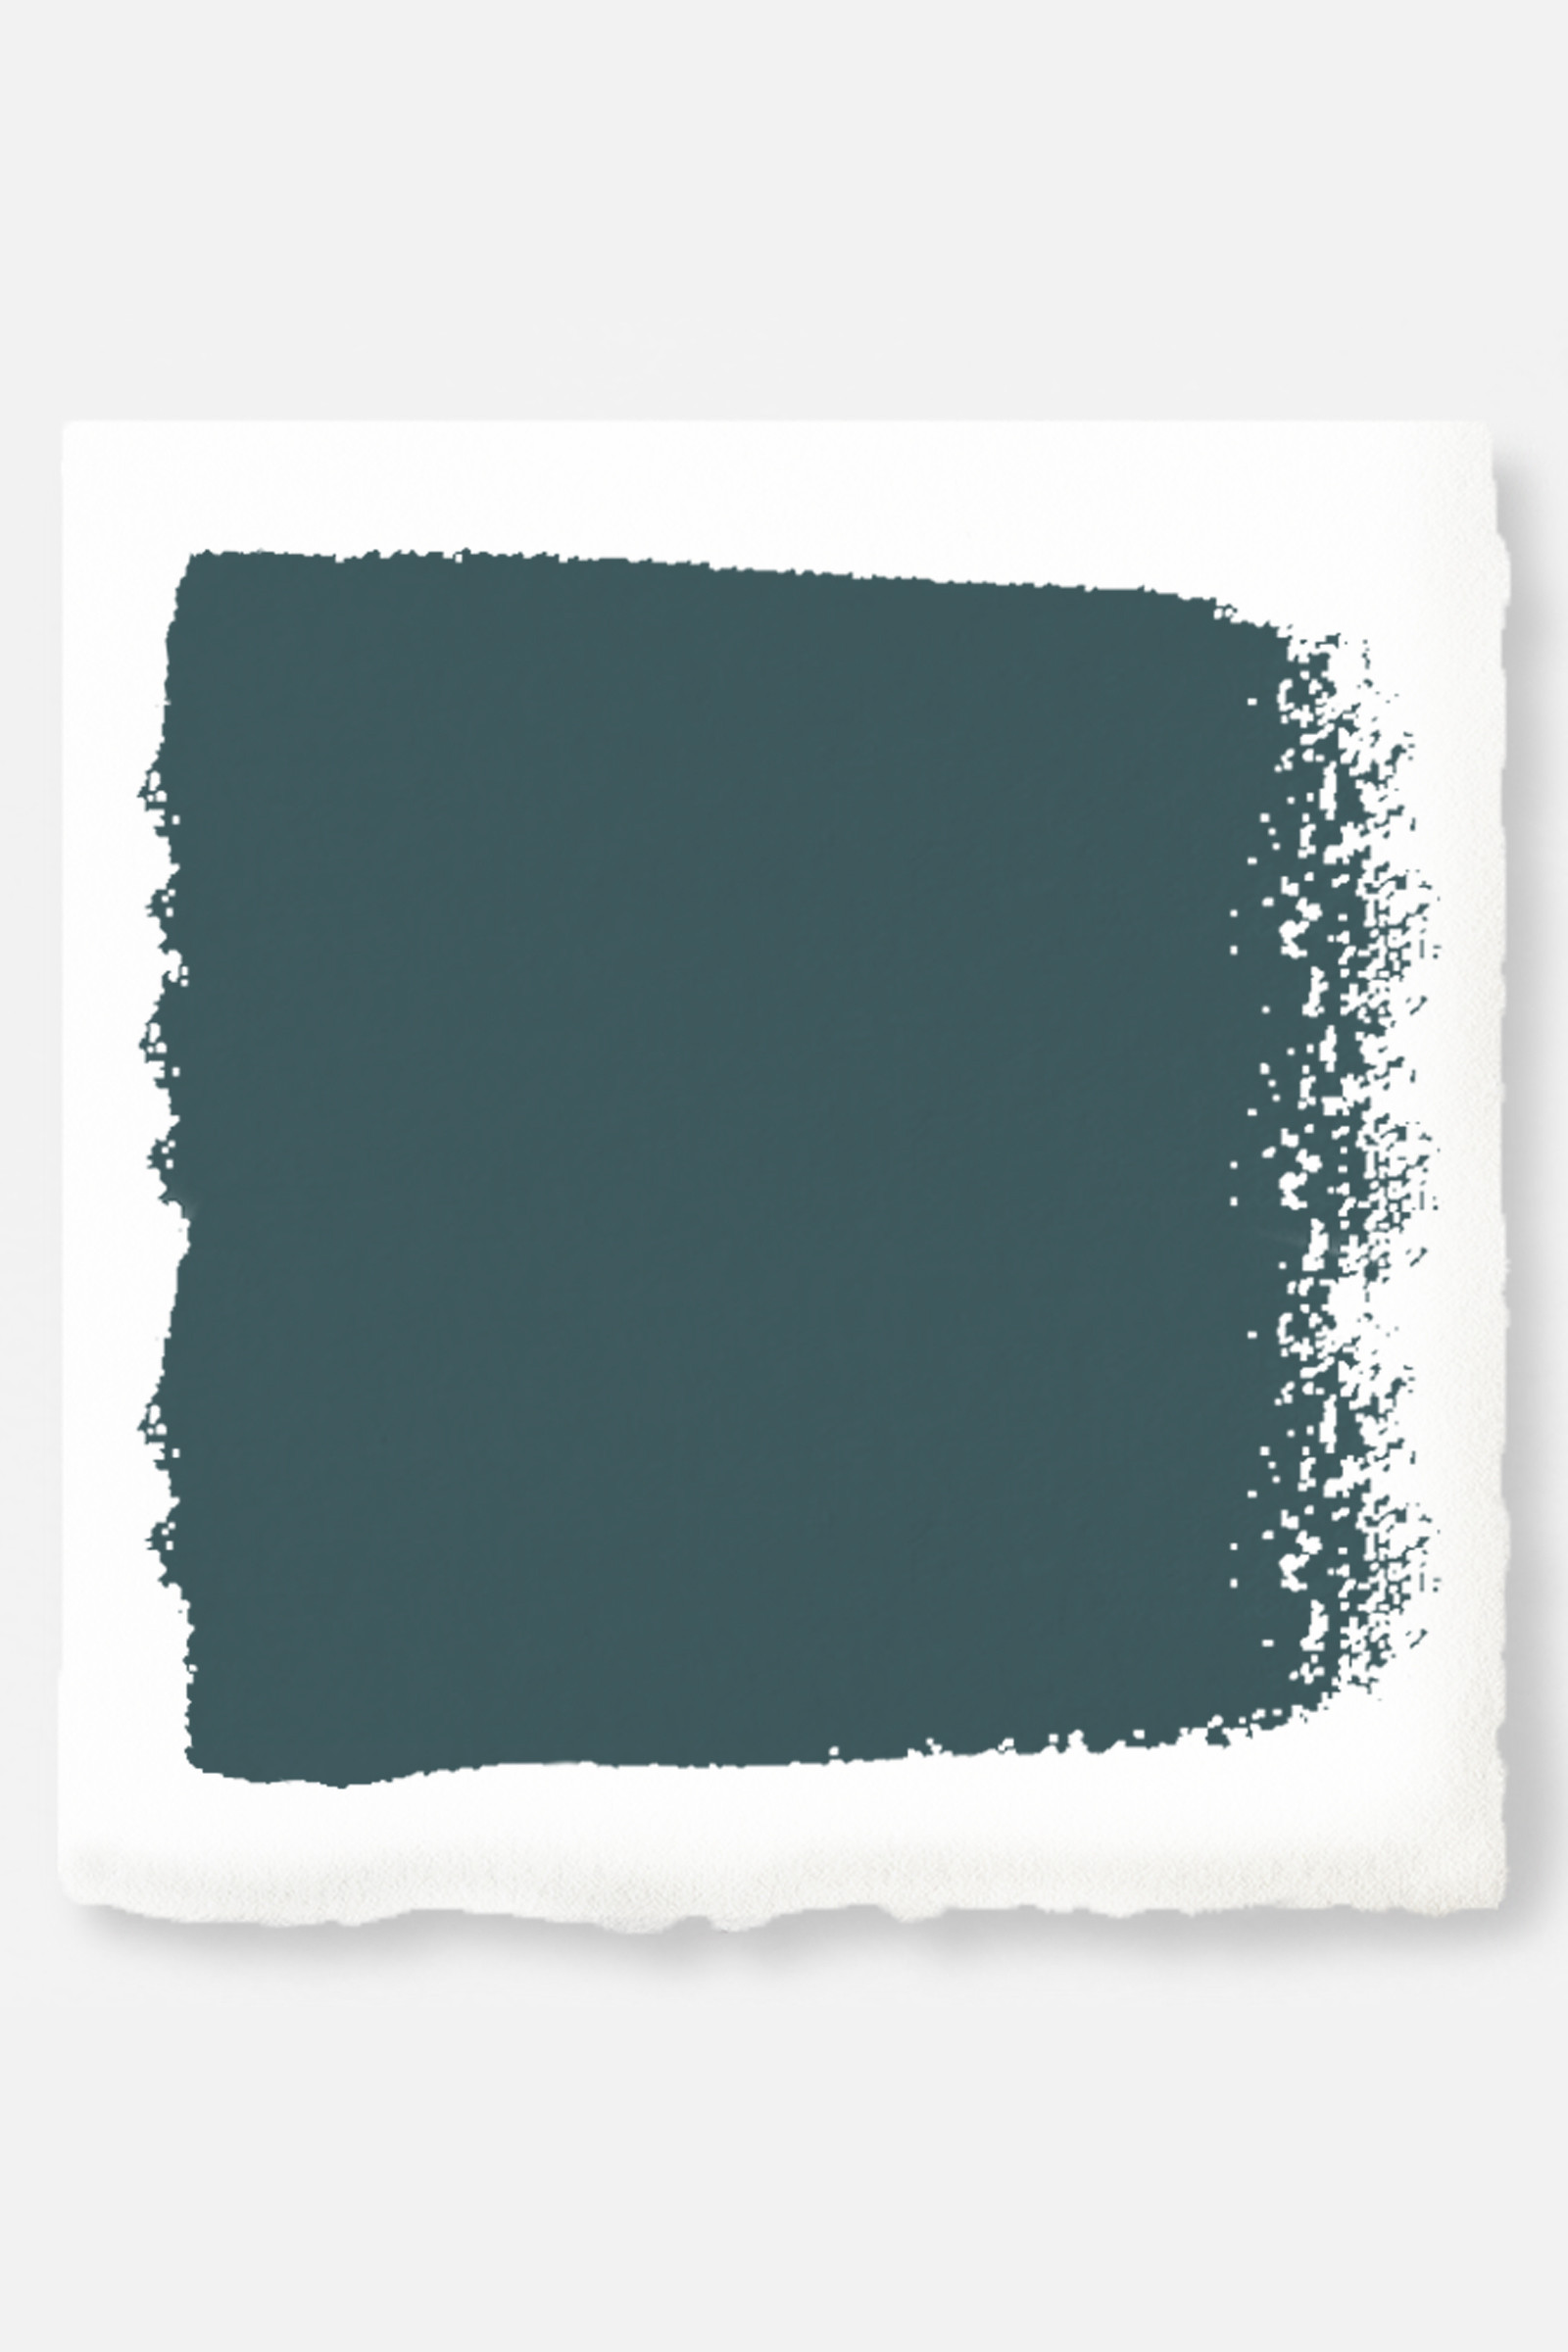 Best ideas about Joanna Gaines Paint Colors
. Save or Pin Joanna Gaines Favorite Paint Colors HGTV Fixer Upper Now.